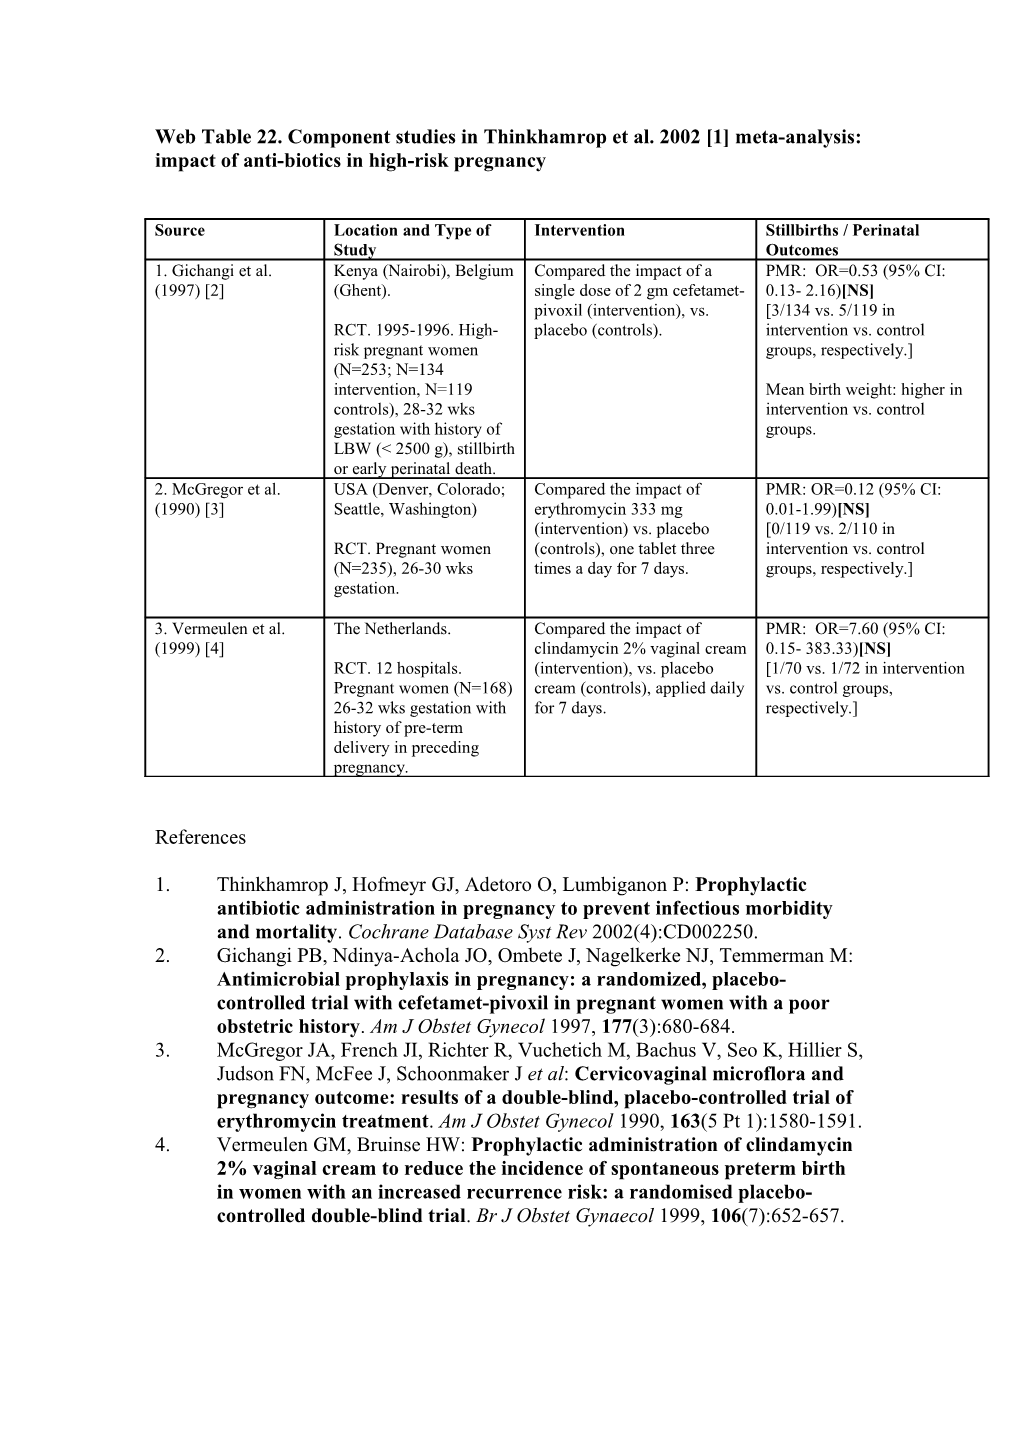 Web Table 22. Component Studies in Thinkhamrop Et Al. 2002 1 Meta-Analysis: Impact Of